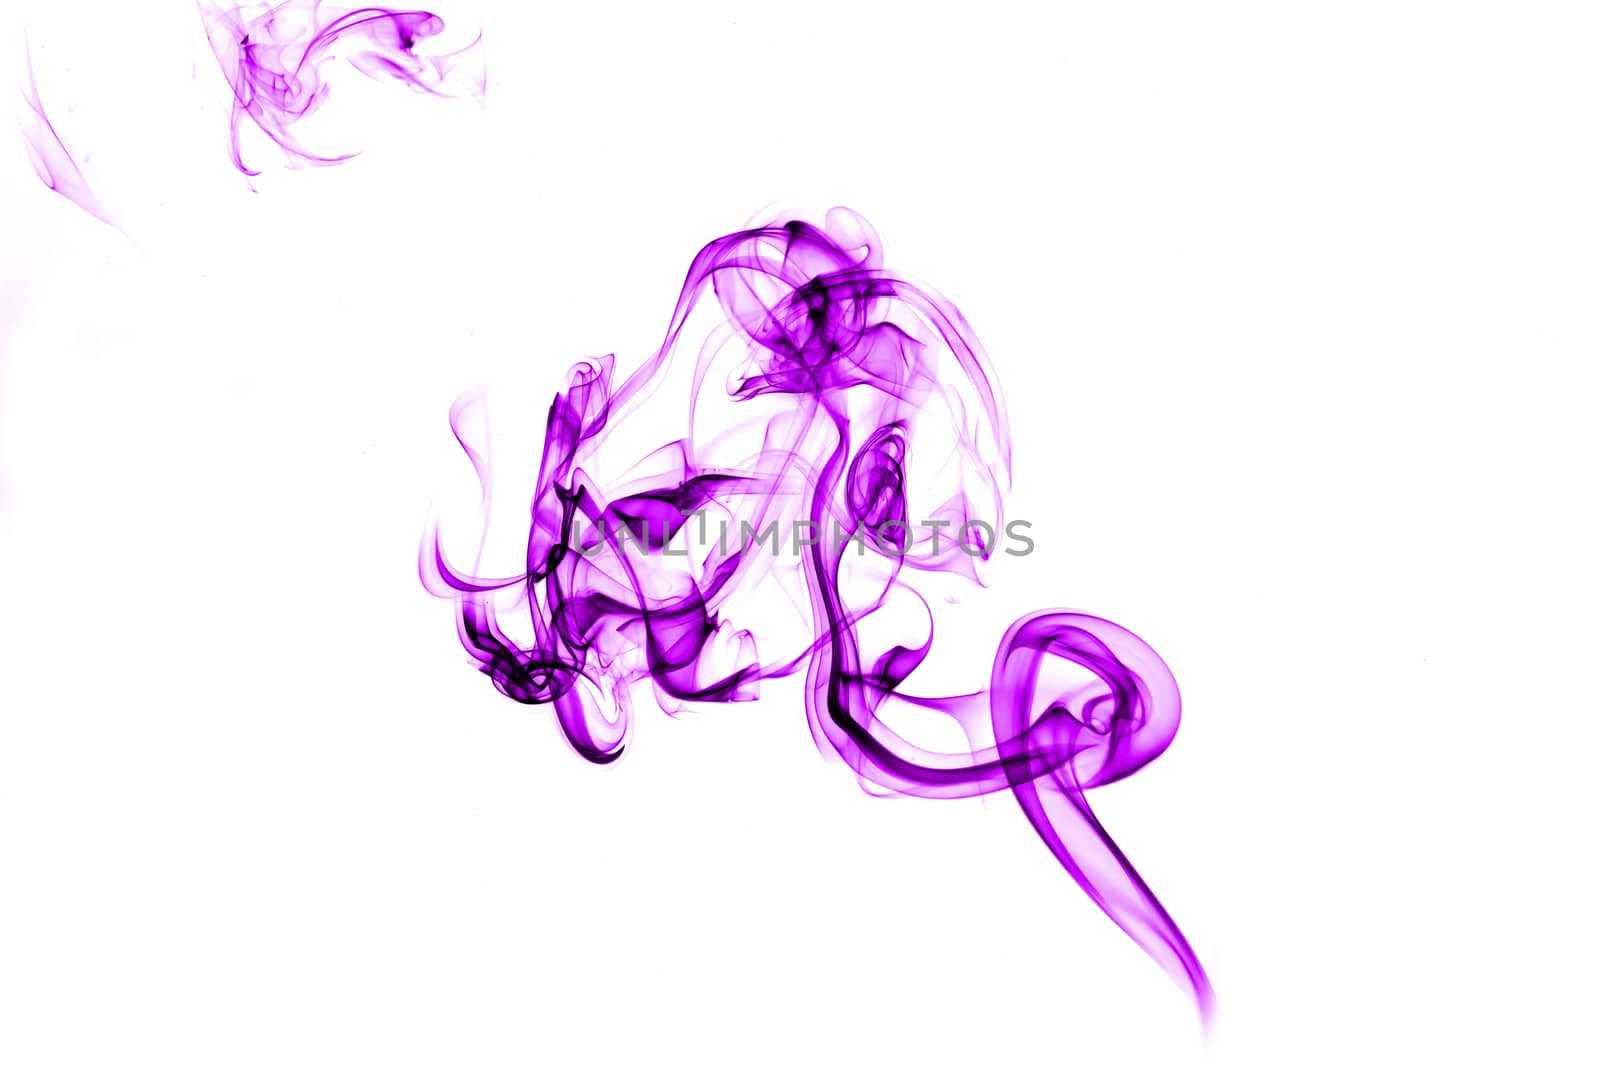 purple smoke with light on white background